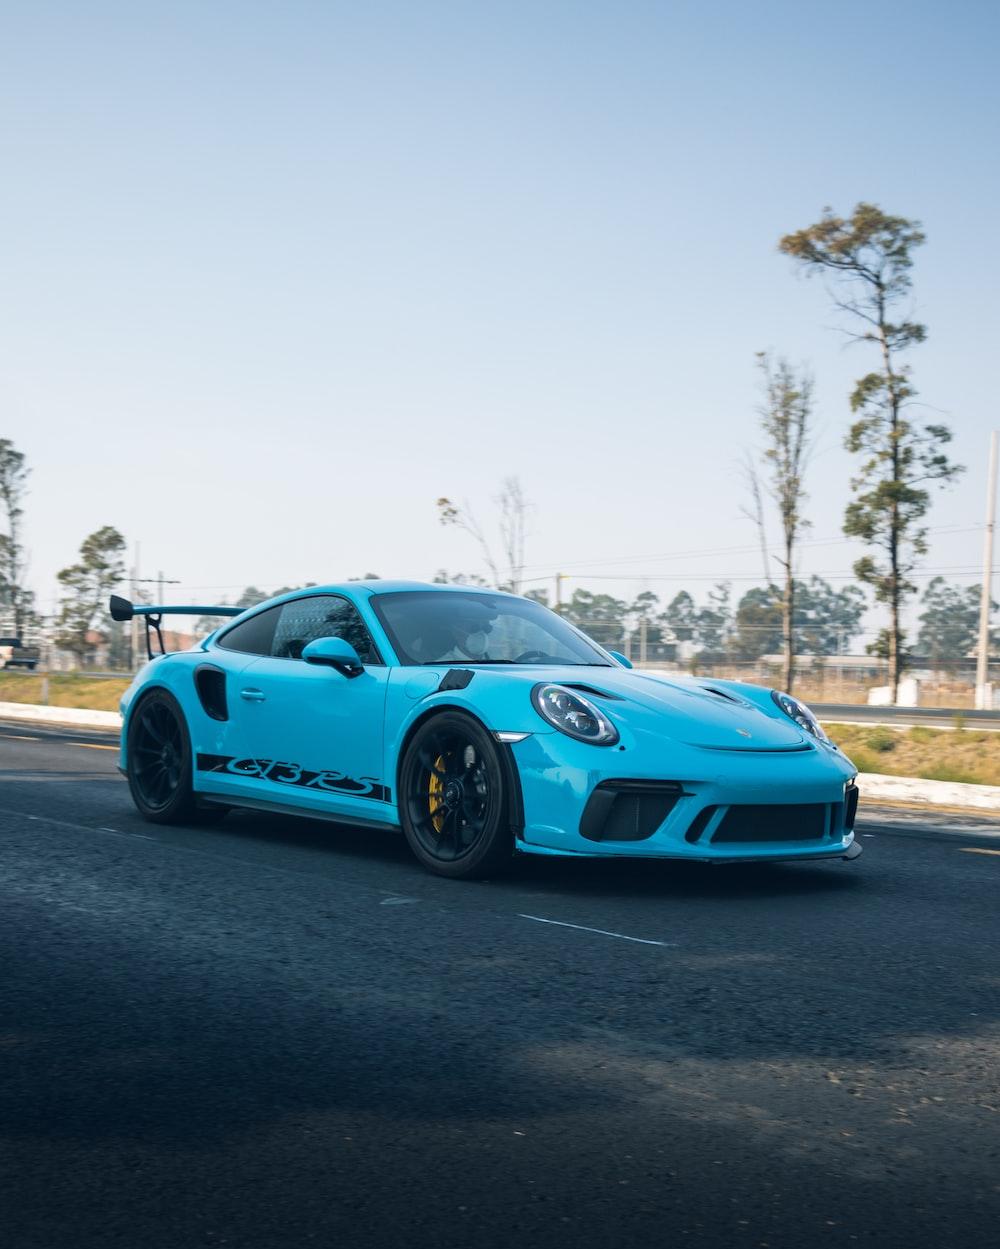 Porsche Best Car Vehicle And Transportation